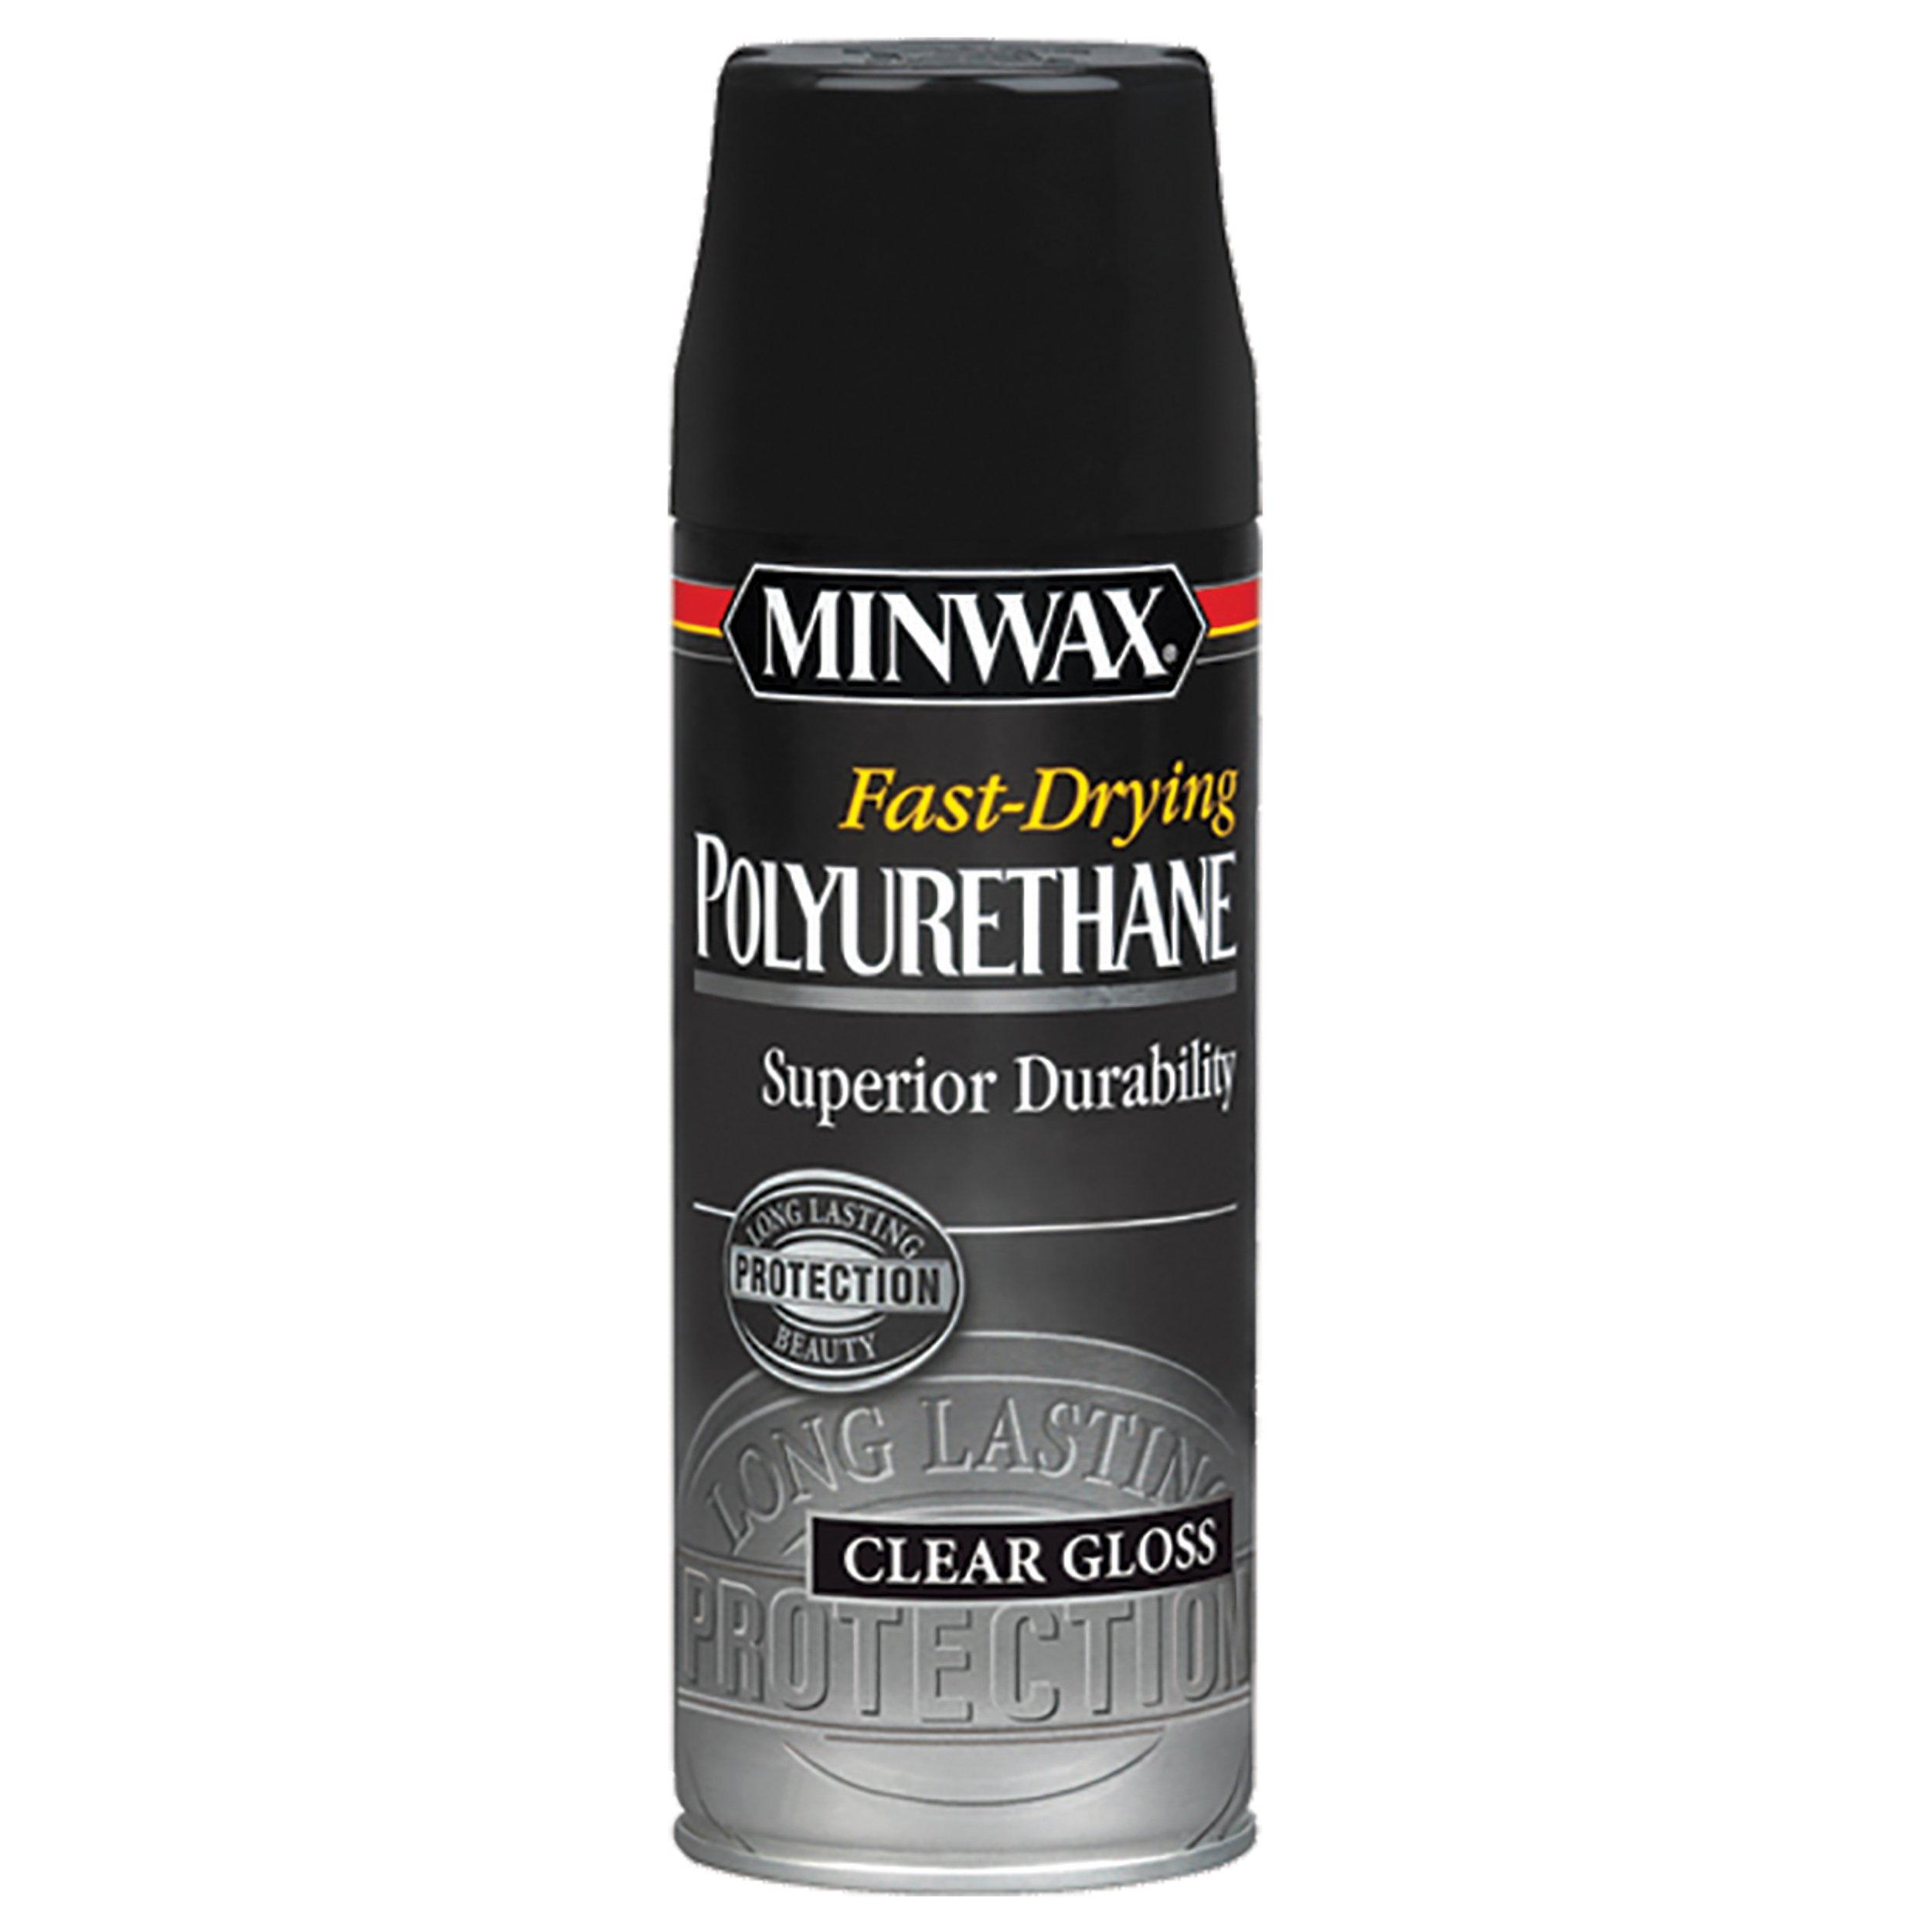 Minwax Fast-Drying Polyurethane Clear Gloss Spray